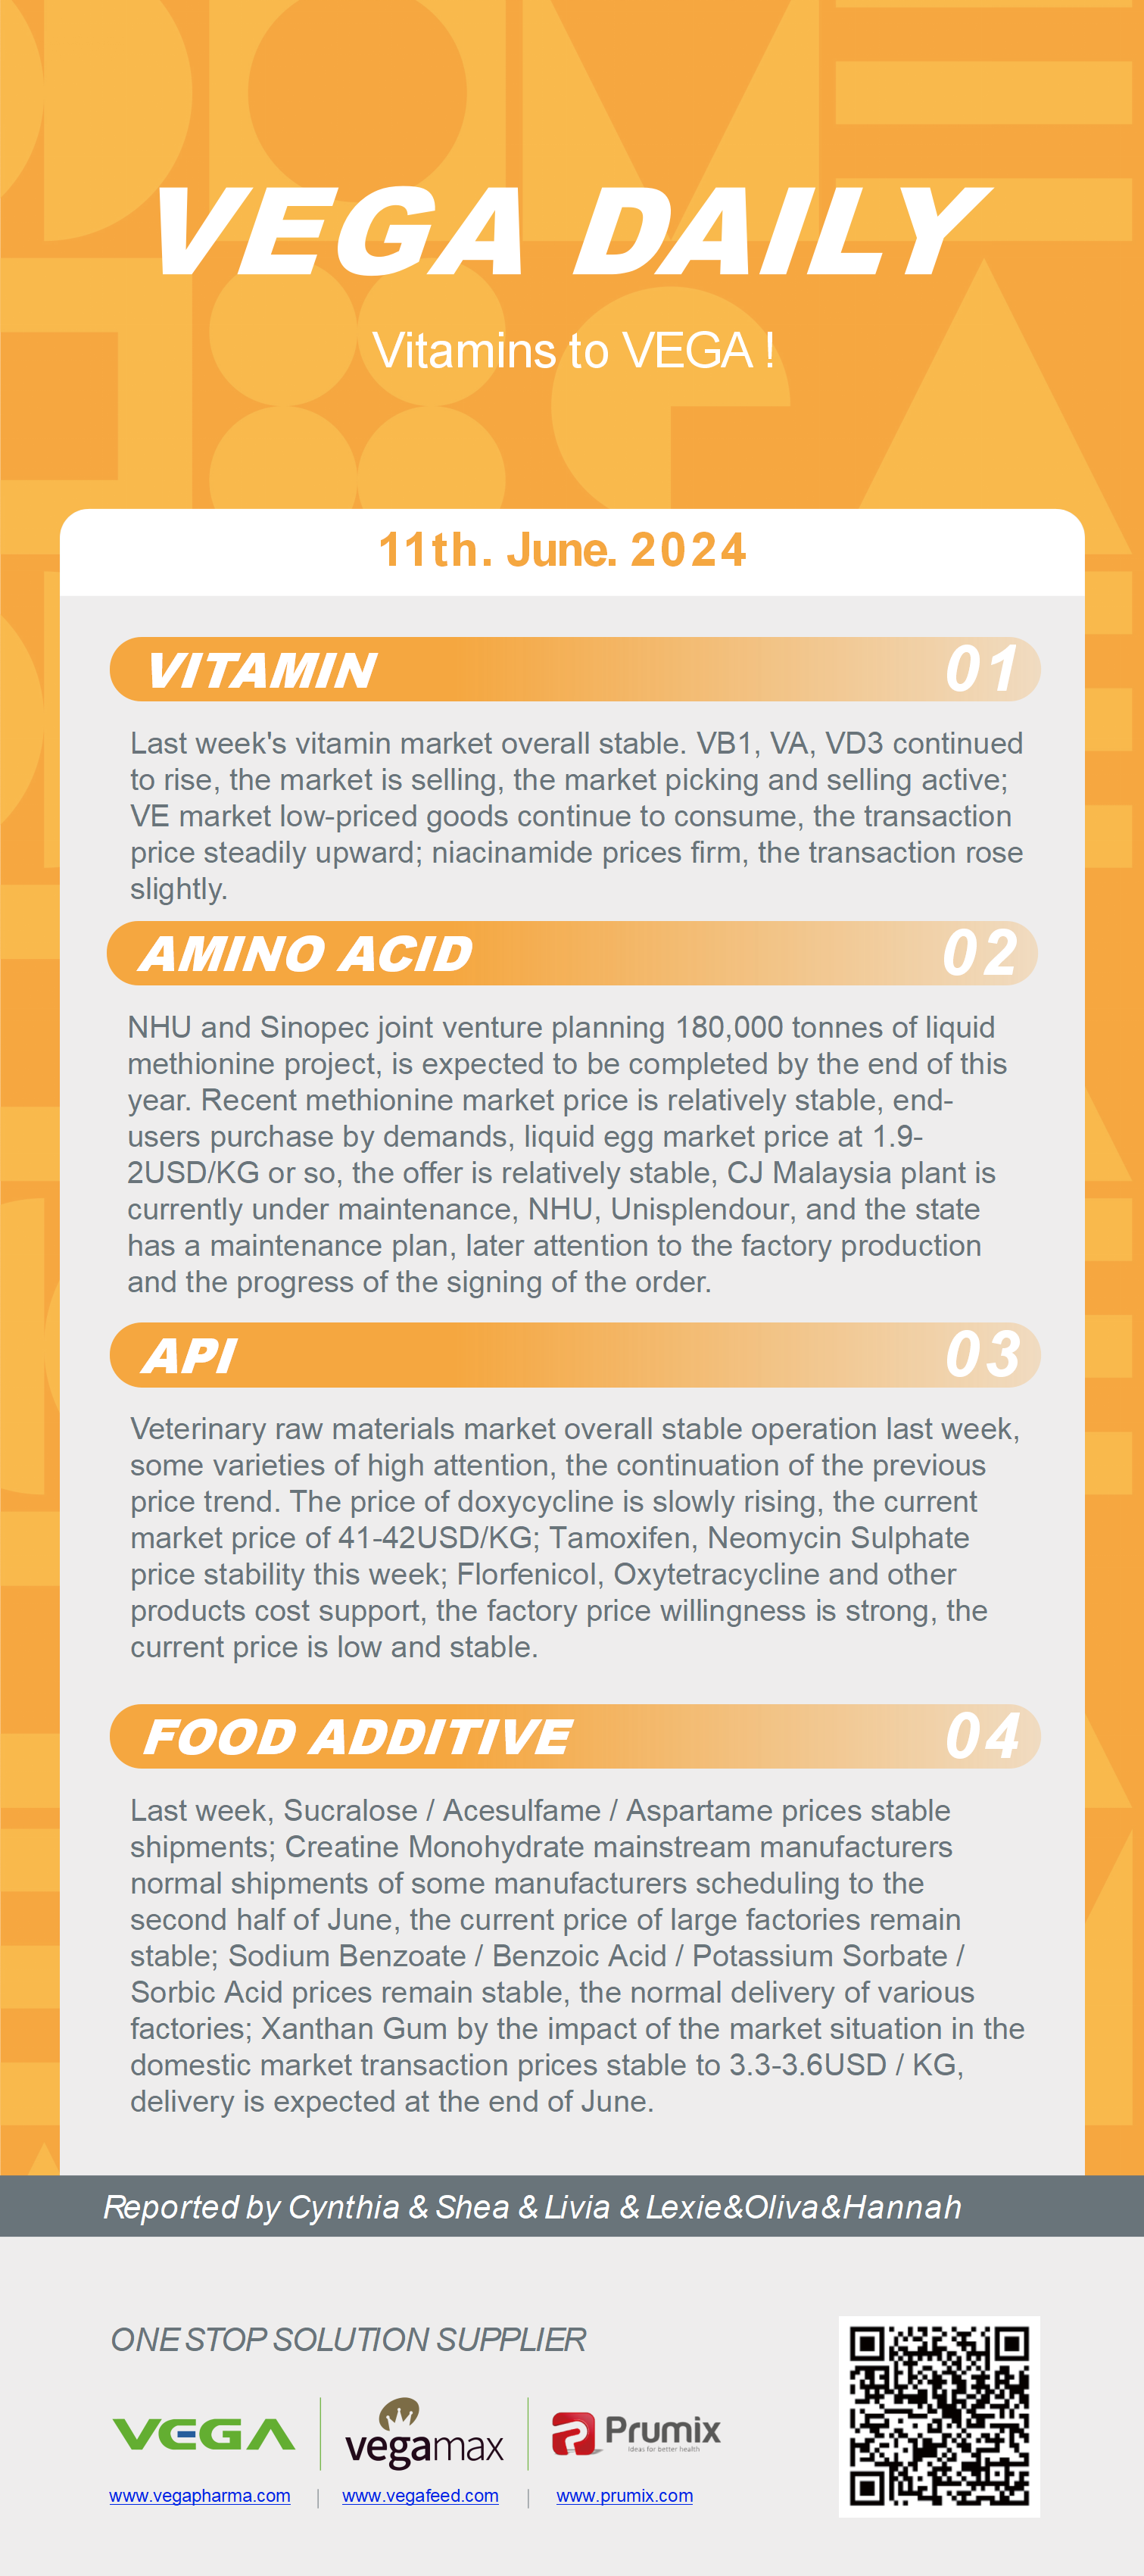 Vega Daily Dated on Jun 11th 2024 Vitamin Amino Acid APl Food Additives.png